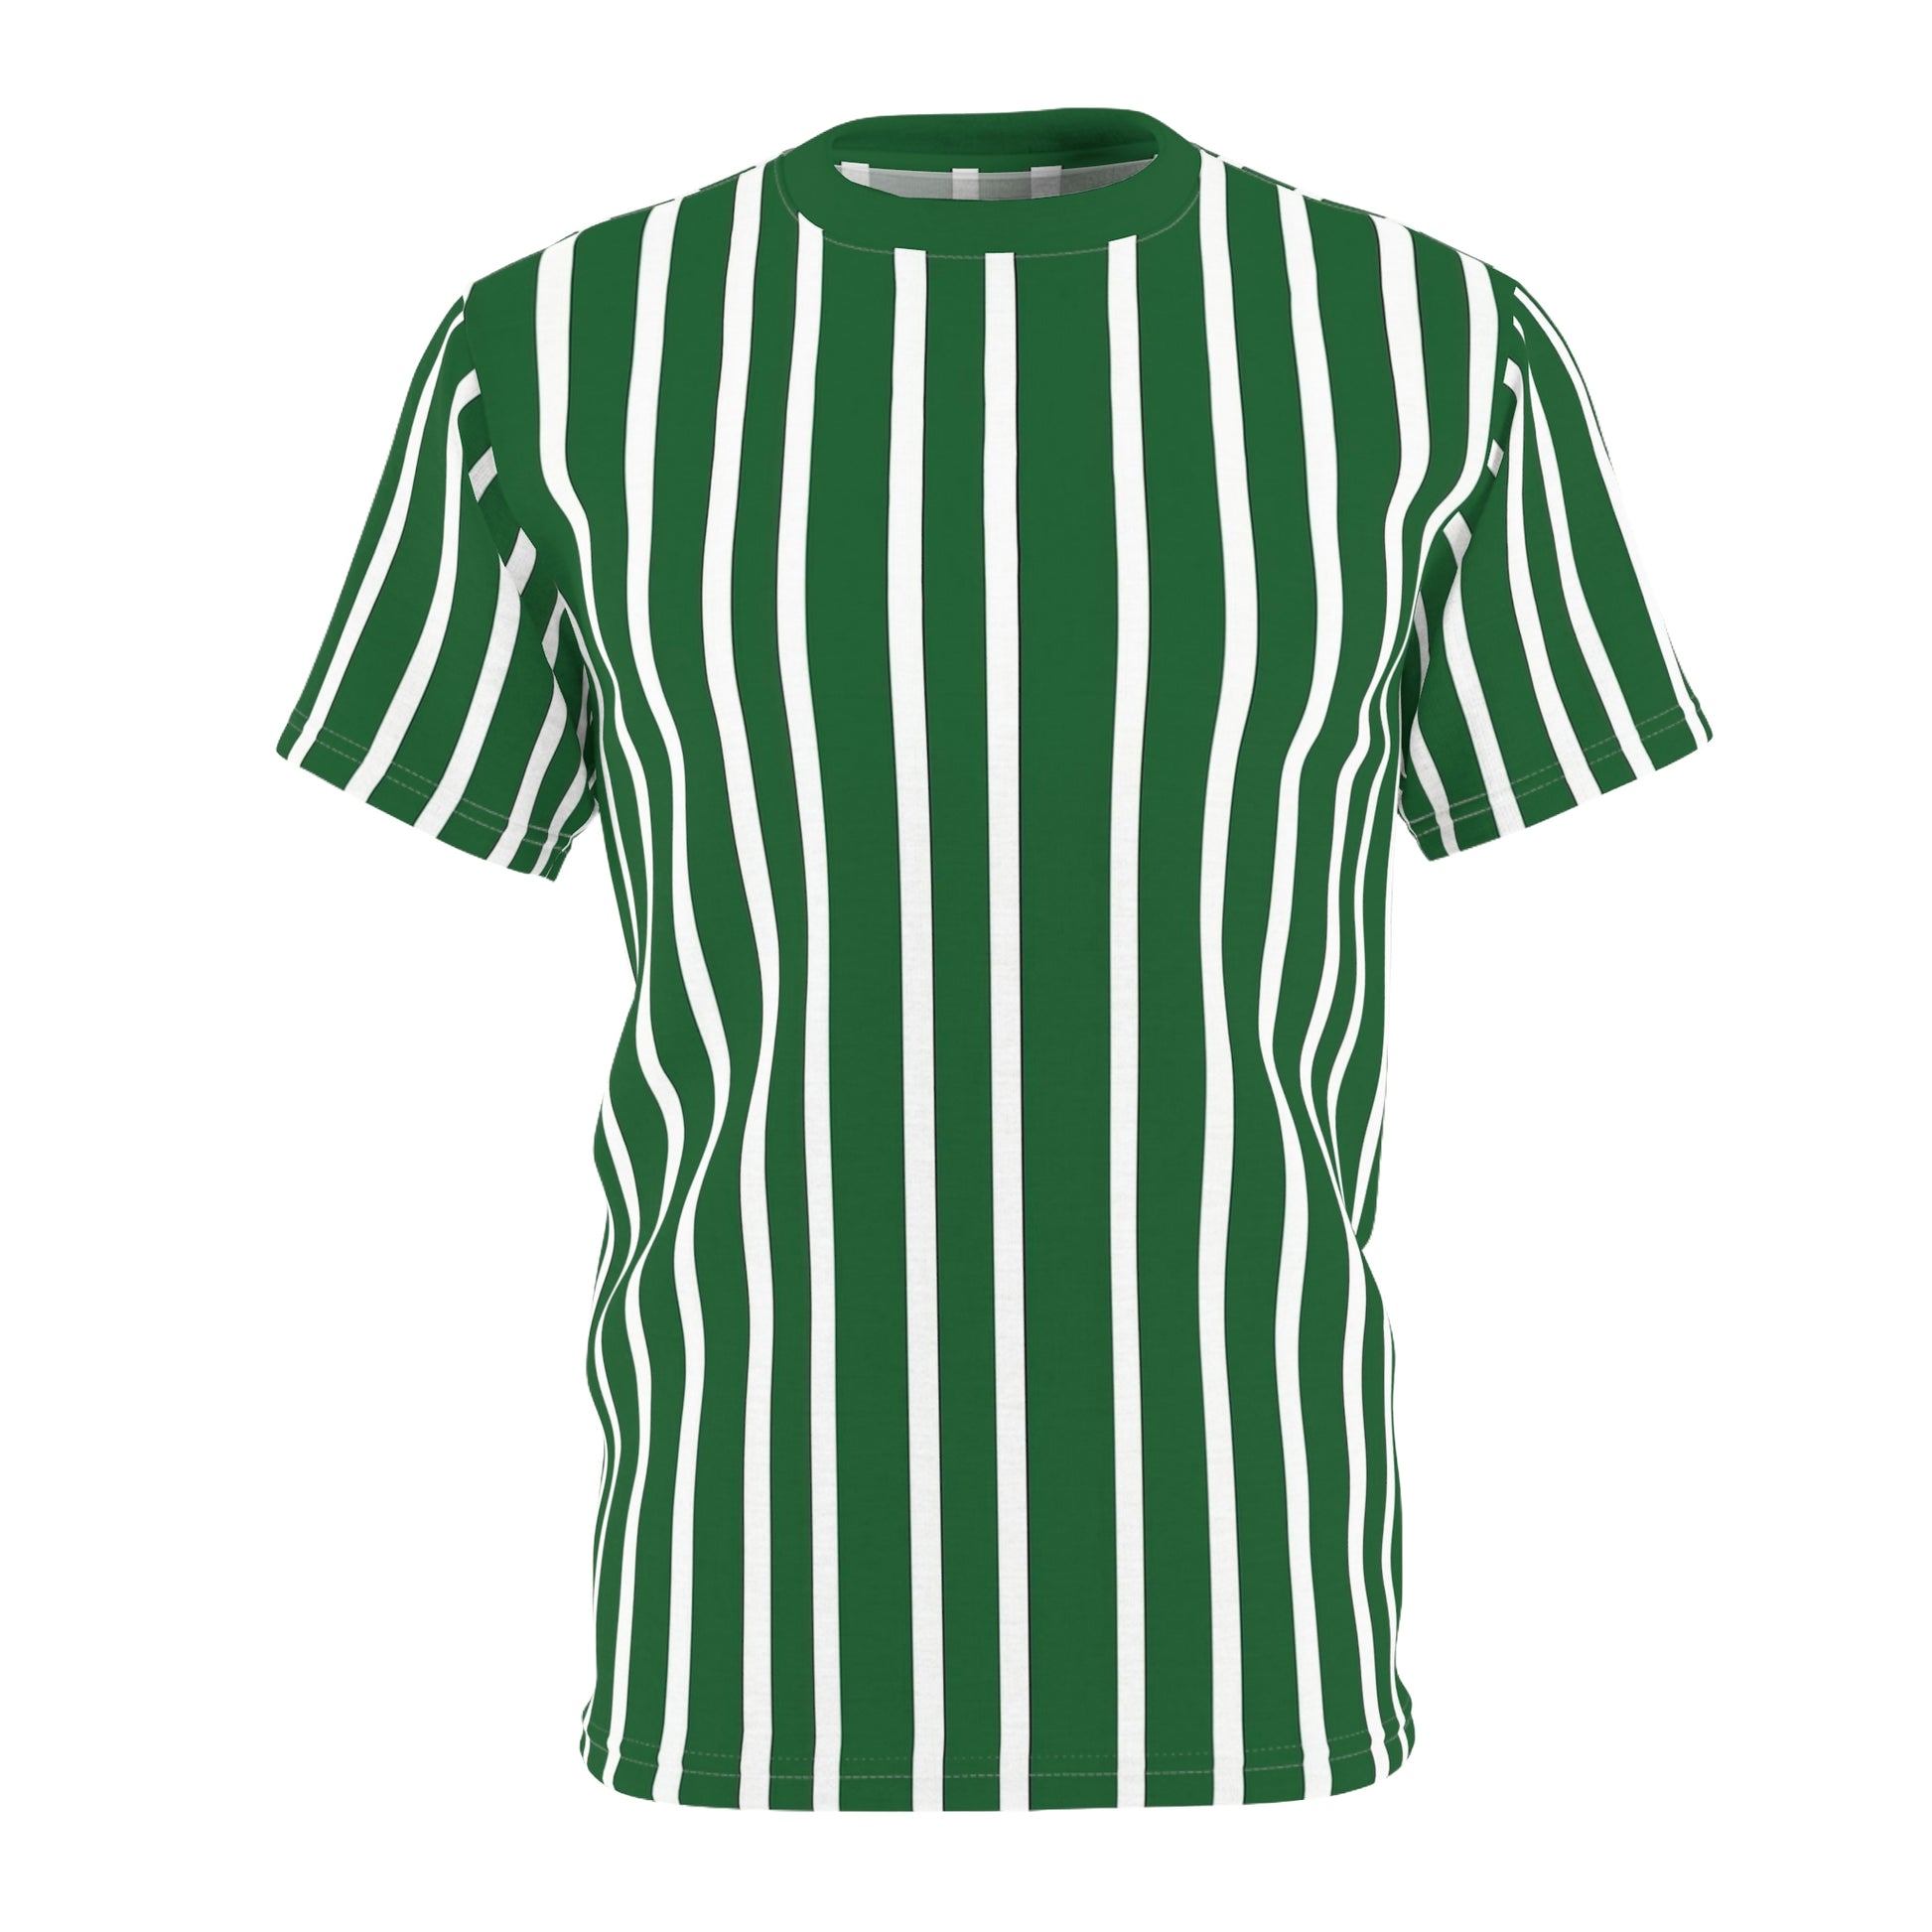 Green White Striped Tshirt, Vertical Stripe Designer Graphic Aesthetic Fashion Crewneck Men Women Tee Top Short Sleeve Shirt Starcove Fashion